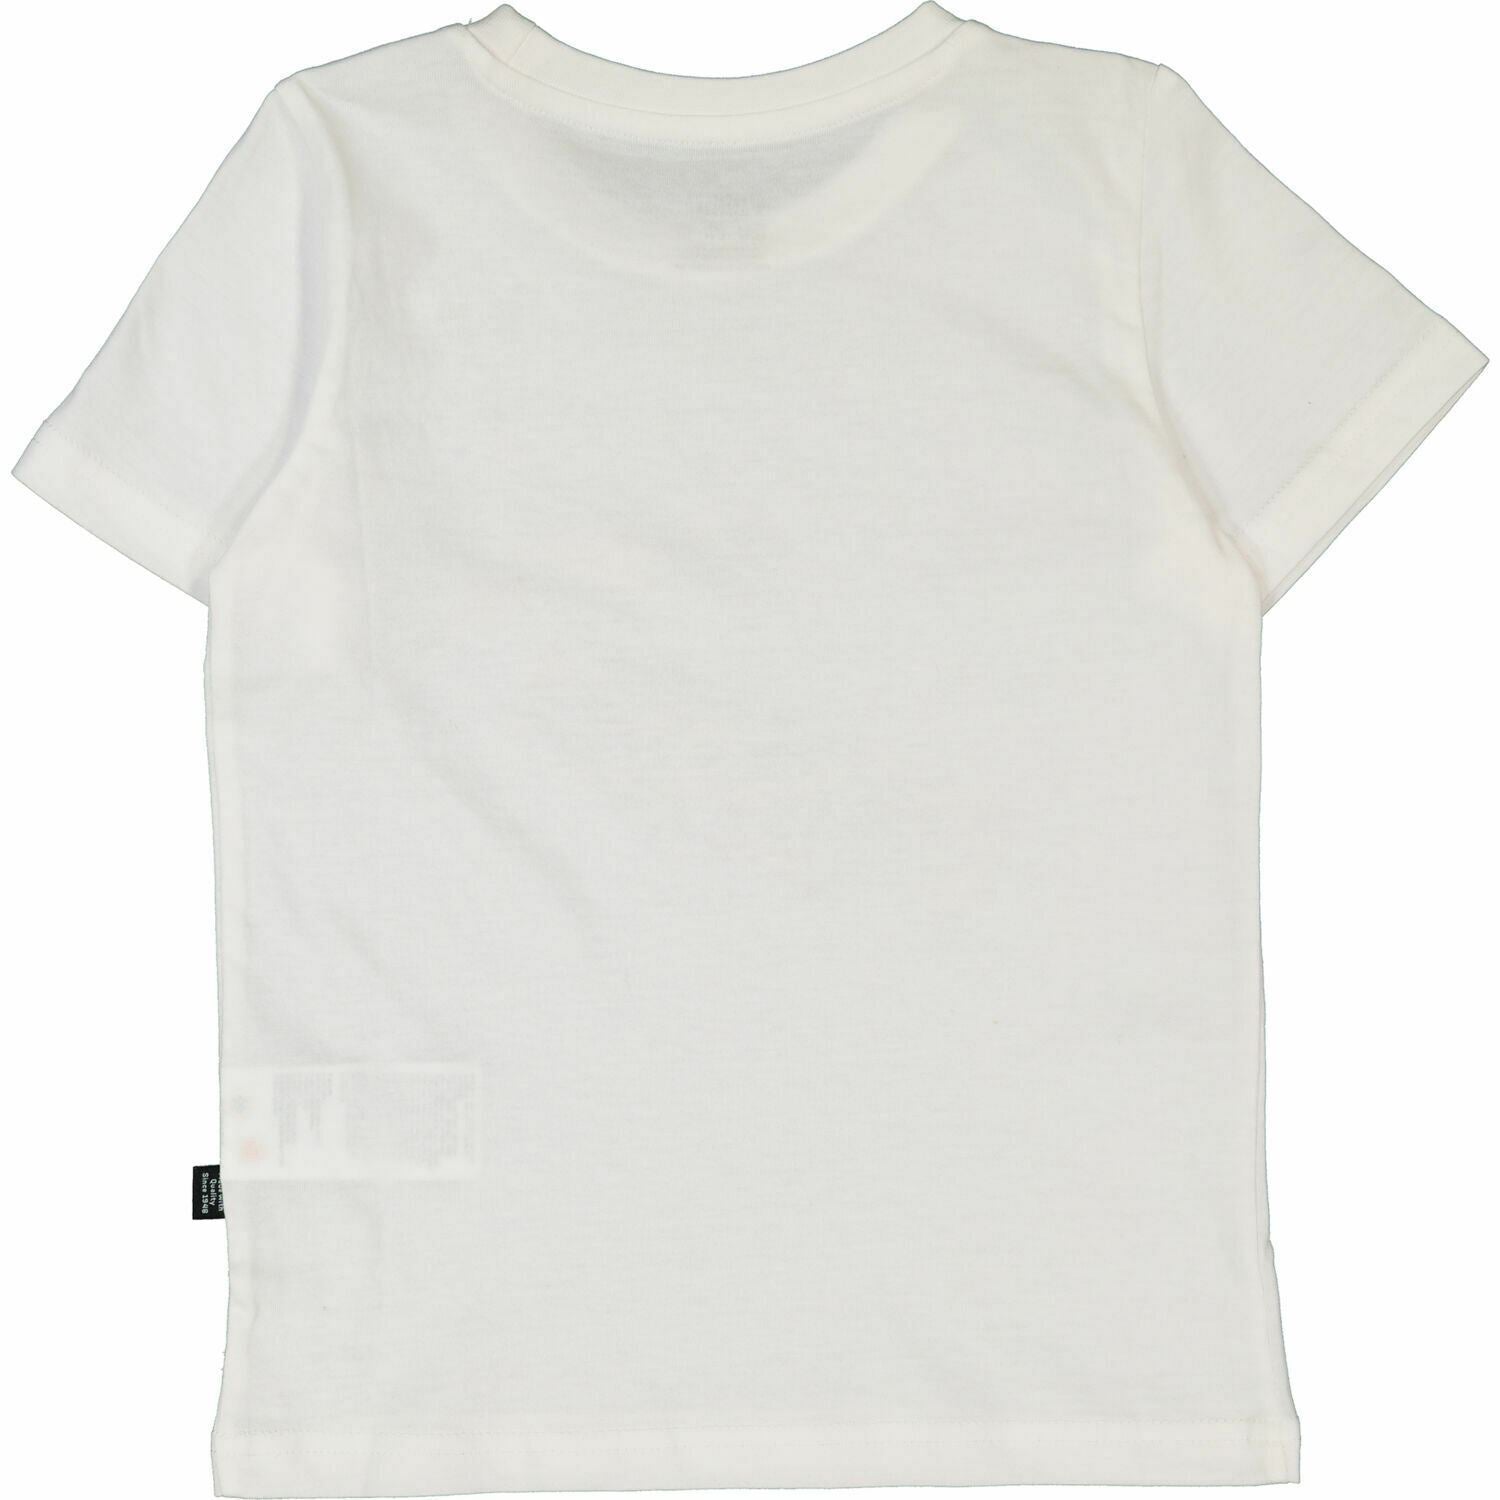 PUMA Boys' Kids' White & Camouflage Logo T-Shirt, 7 y to 8 years